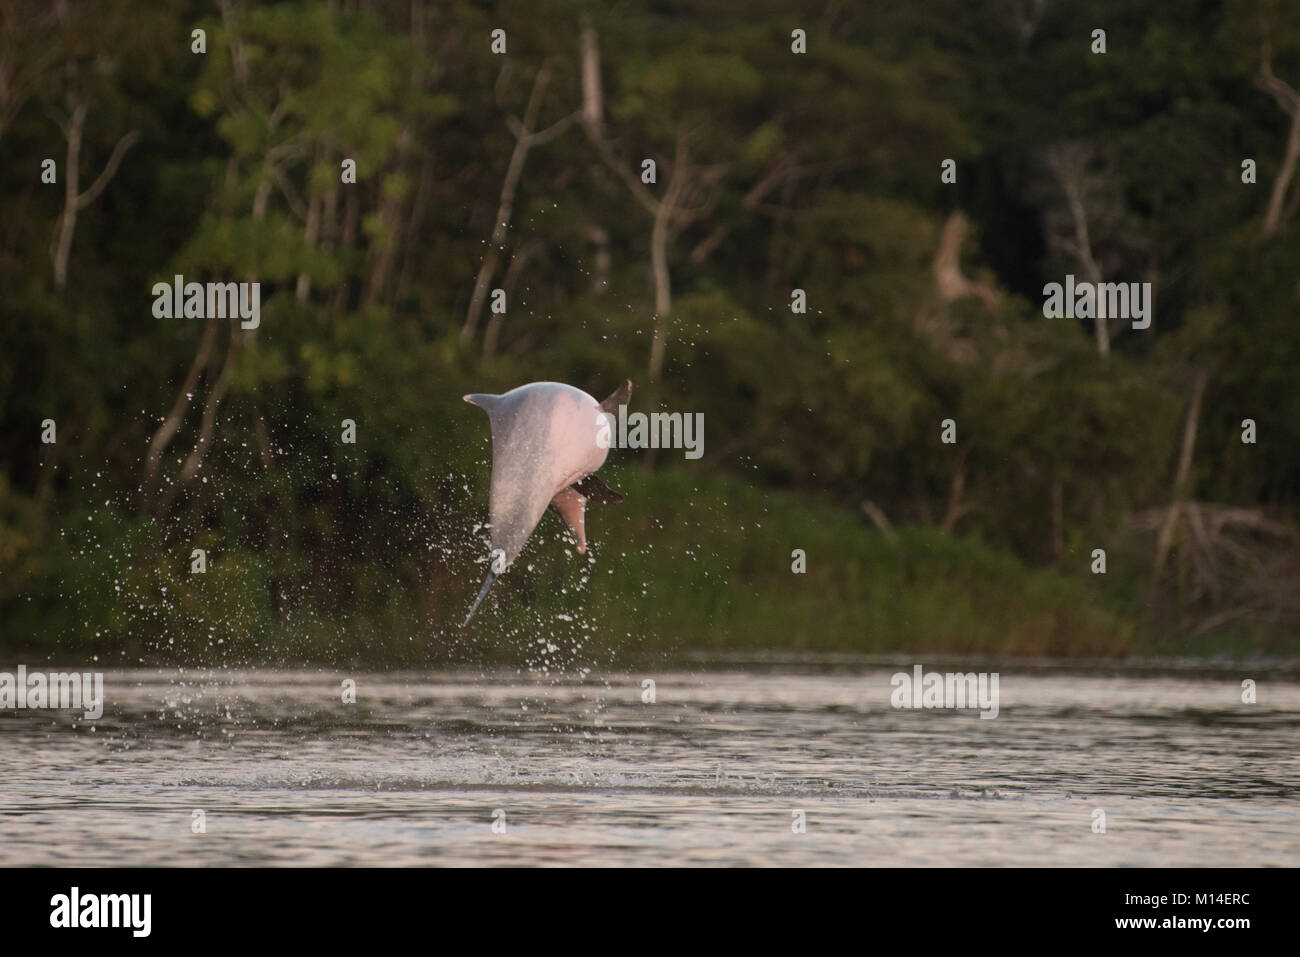 An Tucuxi (Sotalia fluviatilis) a freshwater dolphin leaps from the Amazon river. Stock Photo